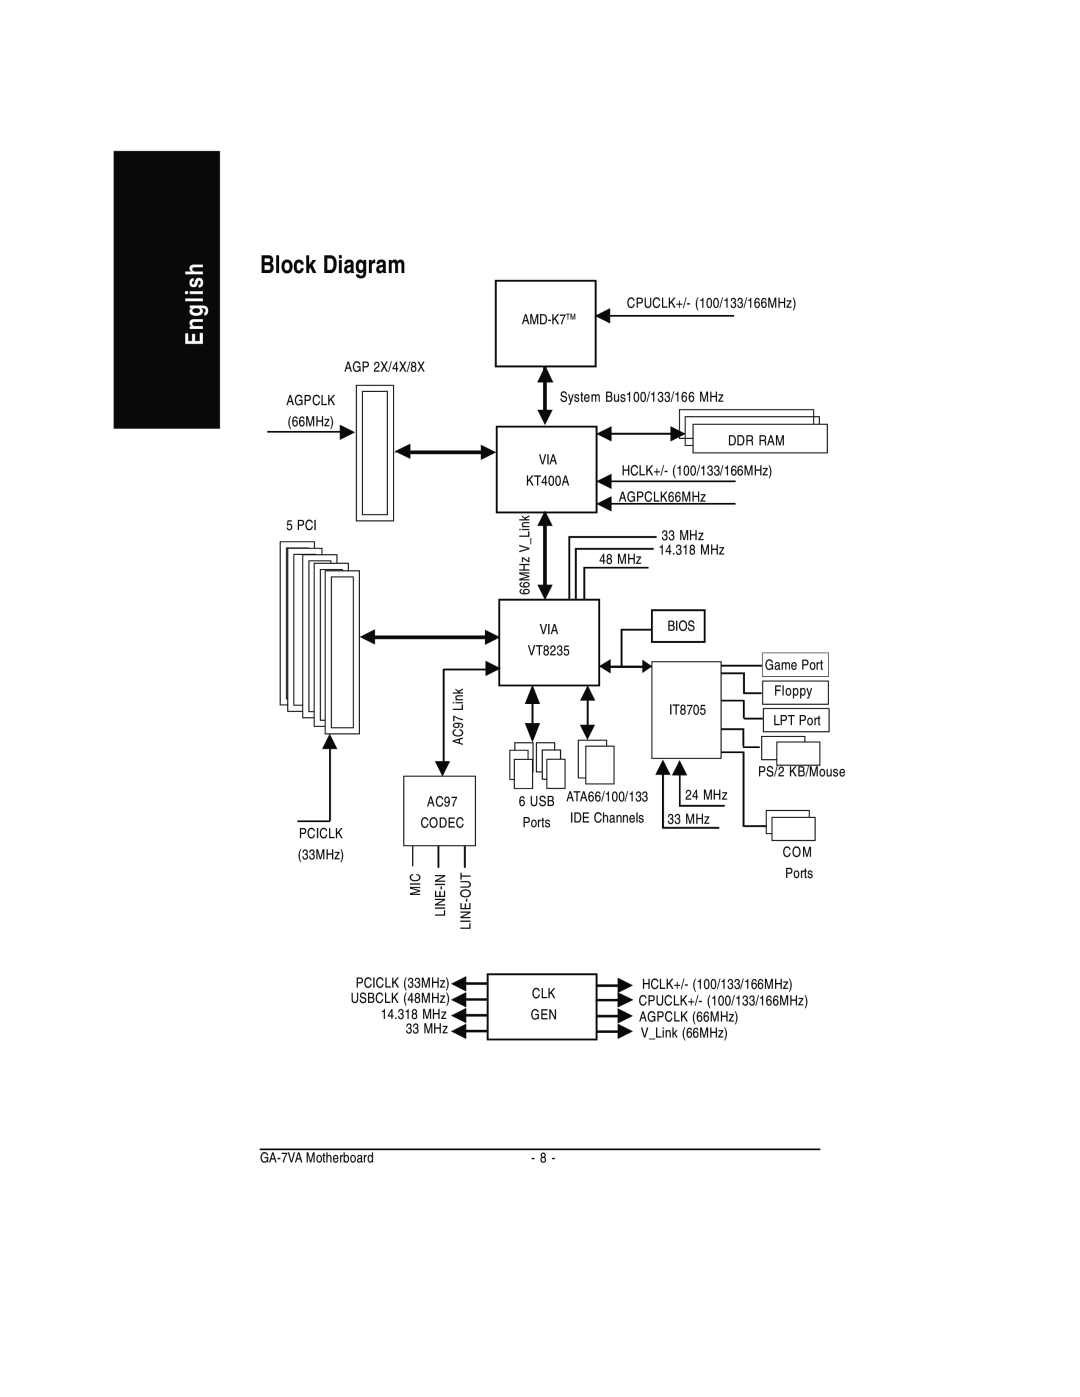 Gigabyte GA-7VA manual Block Diagram, English, AGPCLK 66MHz, KT400A, Link, AC97, USB ATA66/100/133, HCLK+/- 100/133/166MHz 